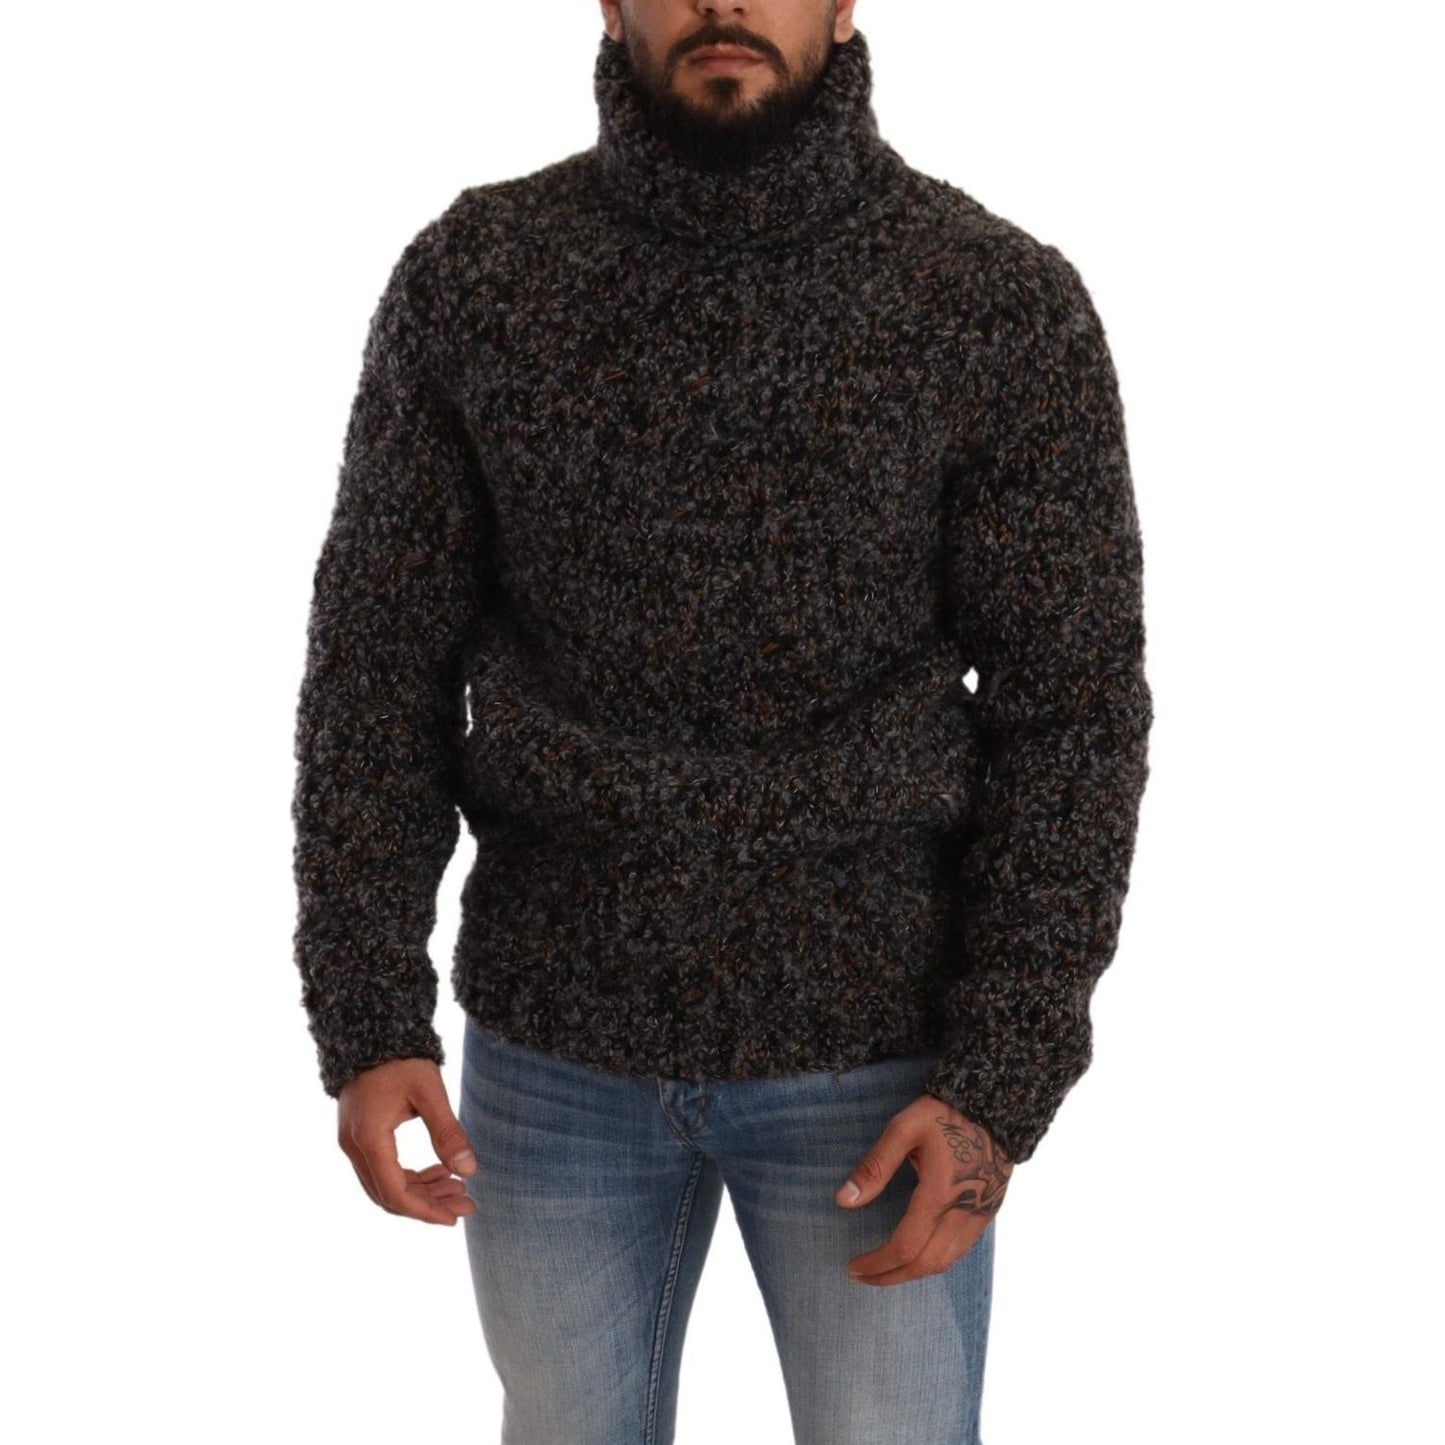 Dolce & Gabbana Elegant Speckled Turtleneck Wool-Blend Sweater MAN SWEATERS gray-wool-blend-turtleneck-pullover-sweater IMG_4851-aeb94aaf-83e.jpg